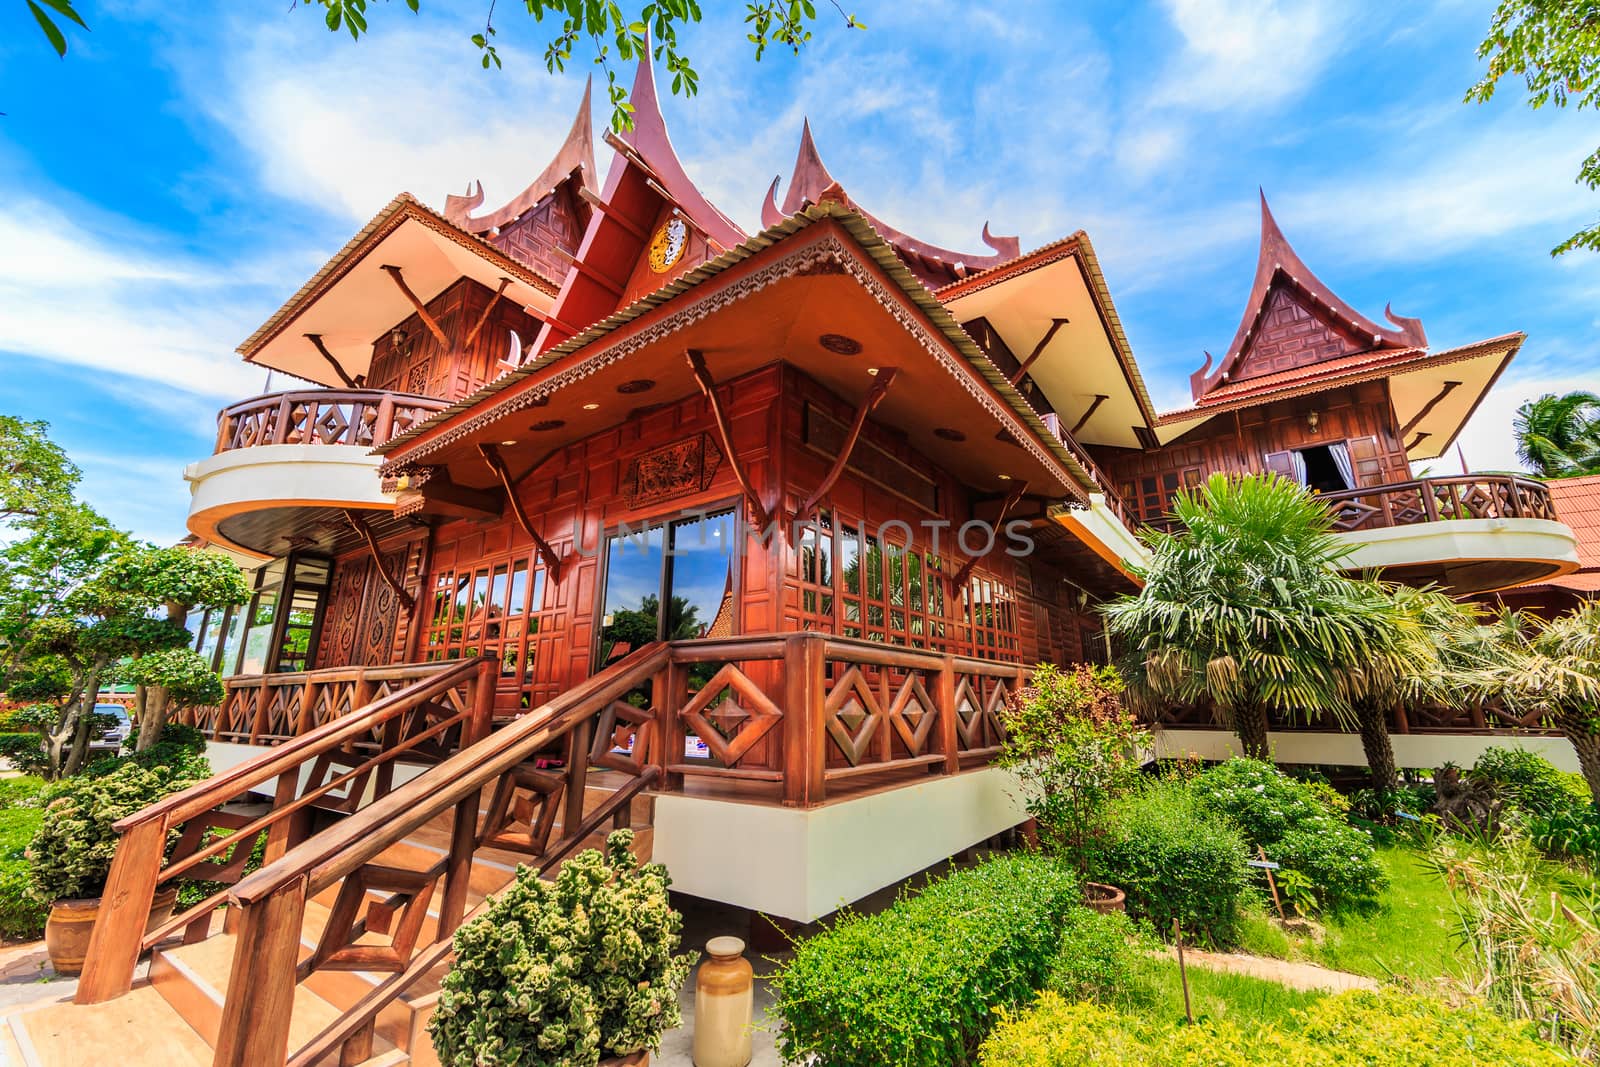 thai house style in thailand